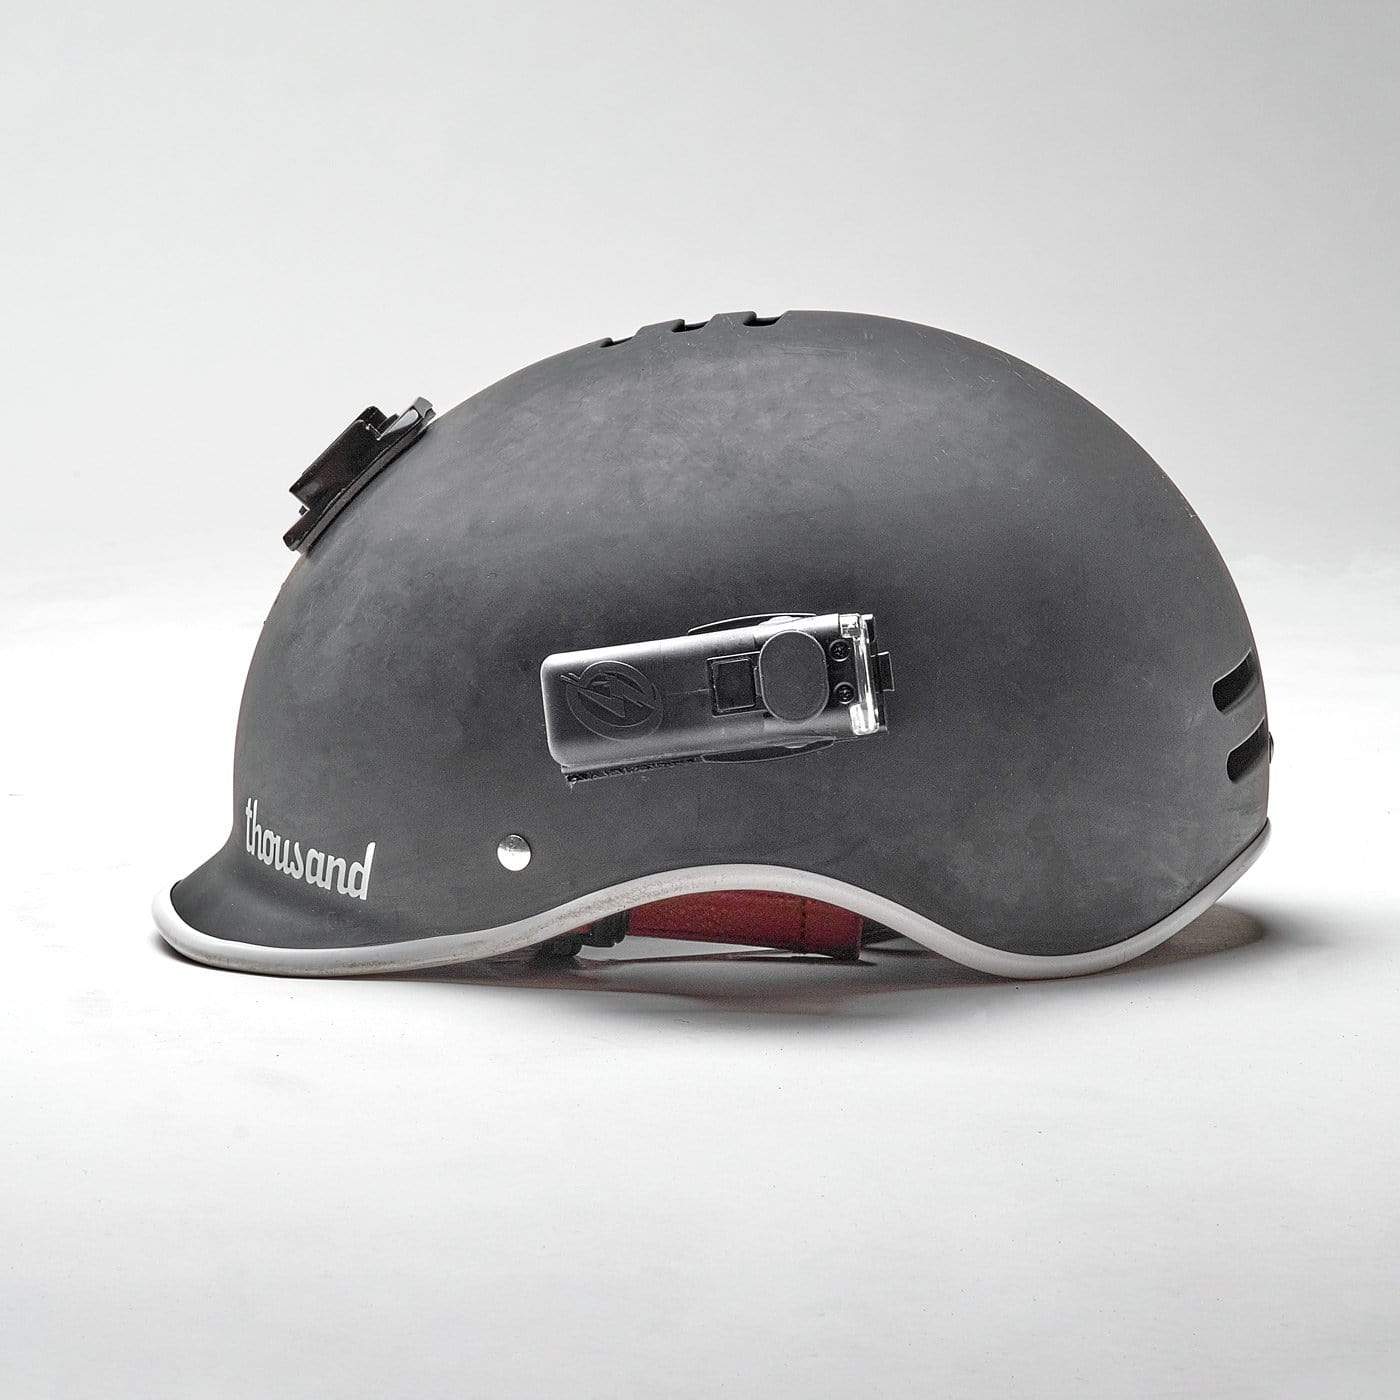 SL-R1 Helmet Single Pack